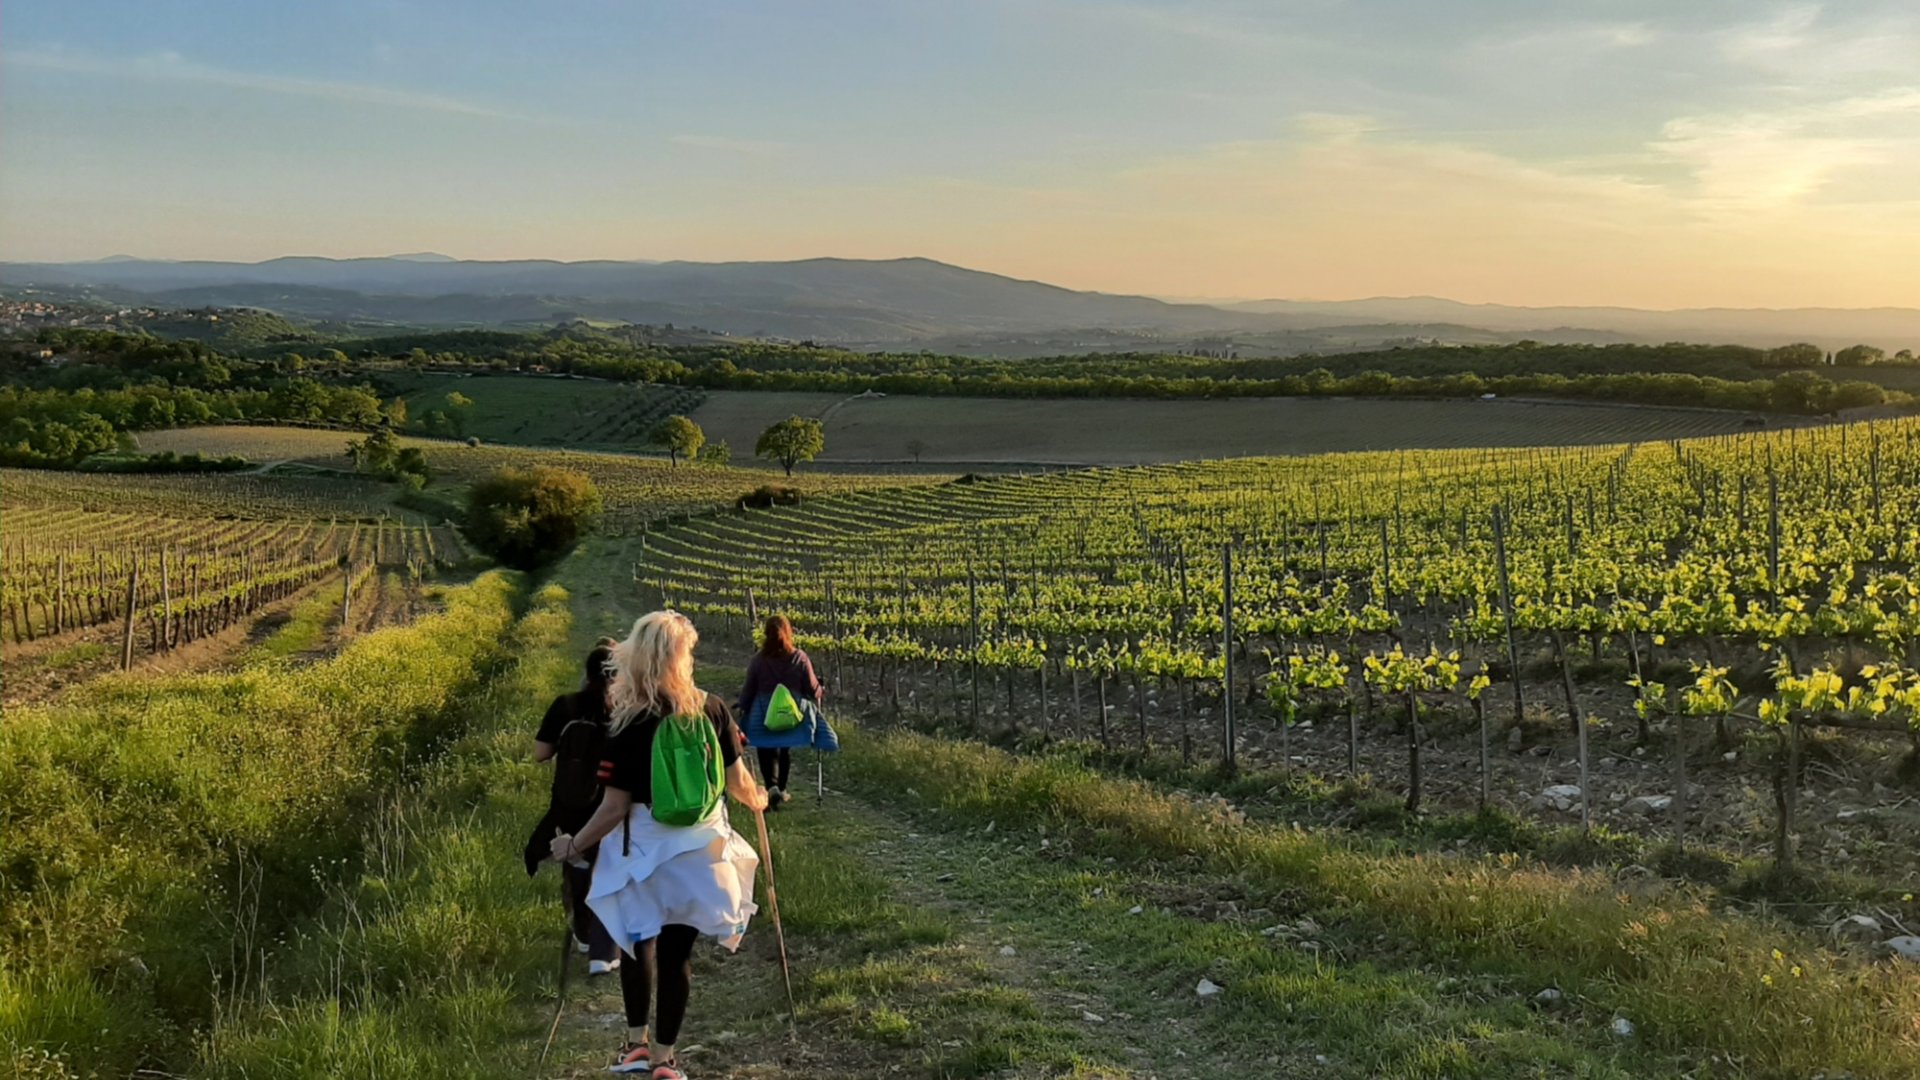 Trekking along the Chianti's vineyards